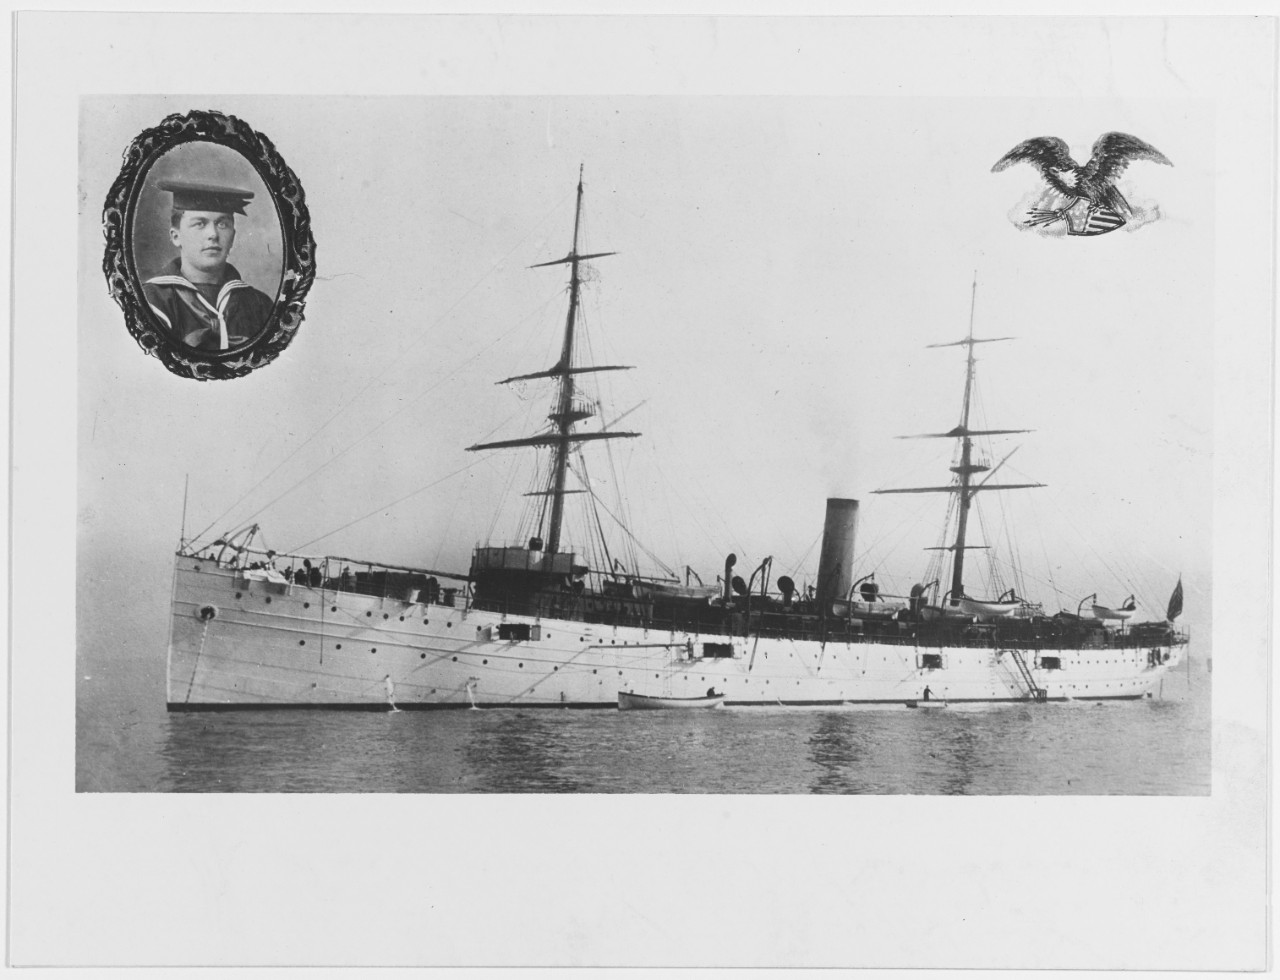 USS YANKEE Auxiliary Cruiser, 1898-1909